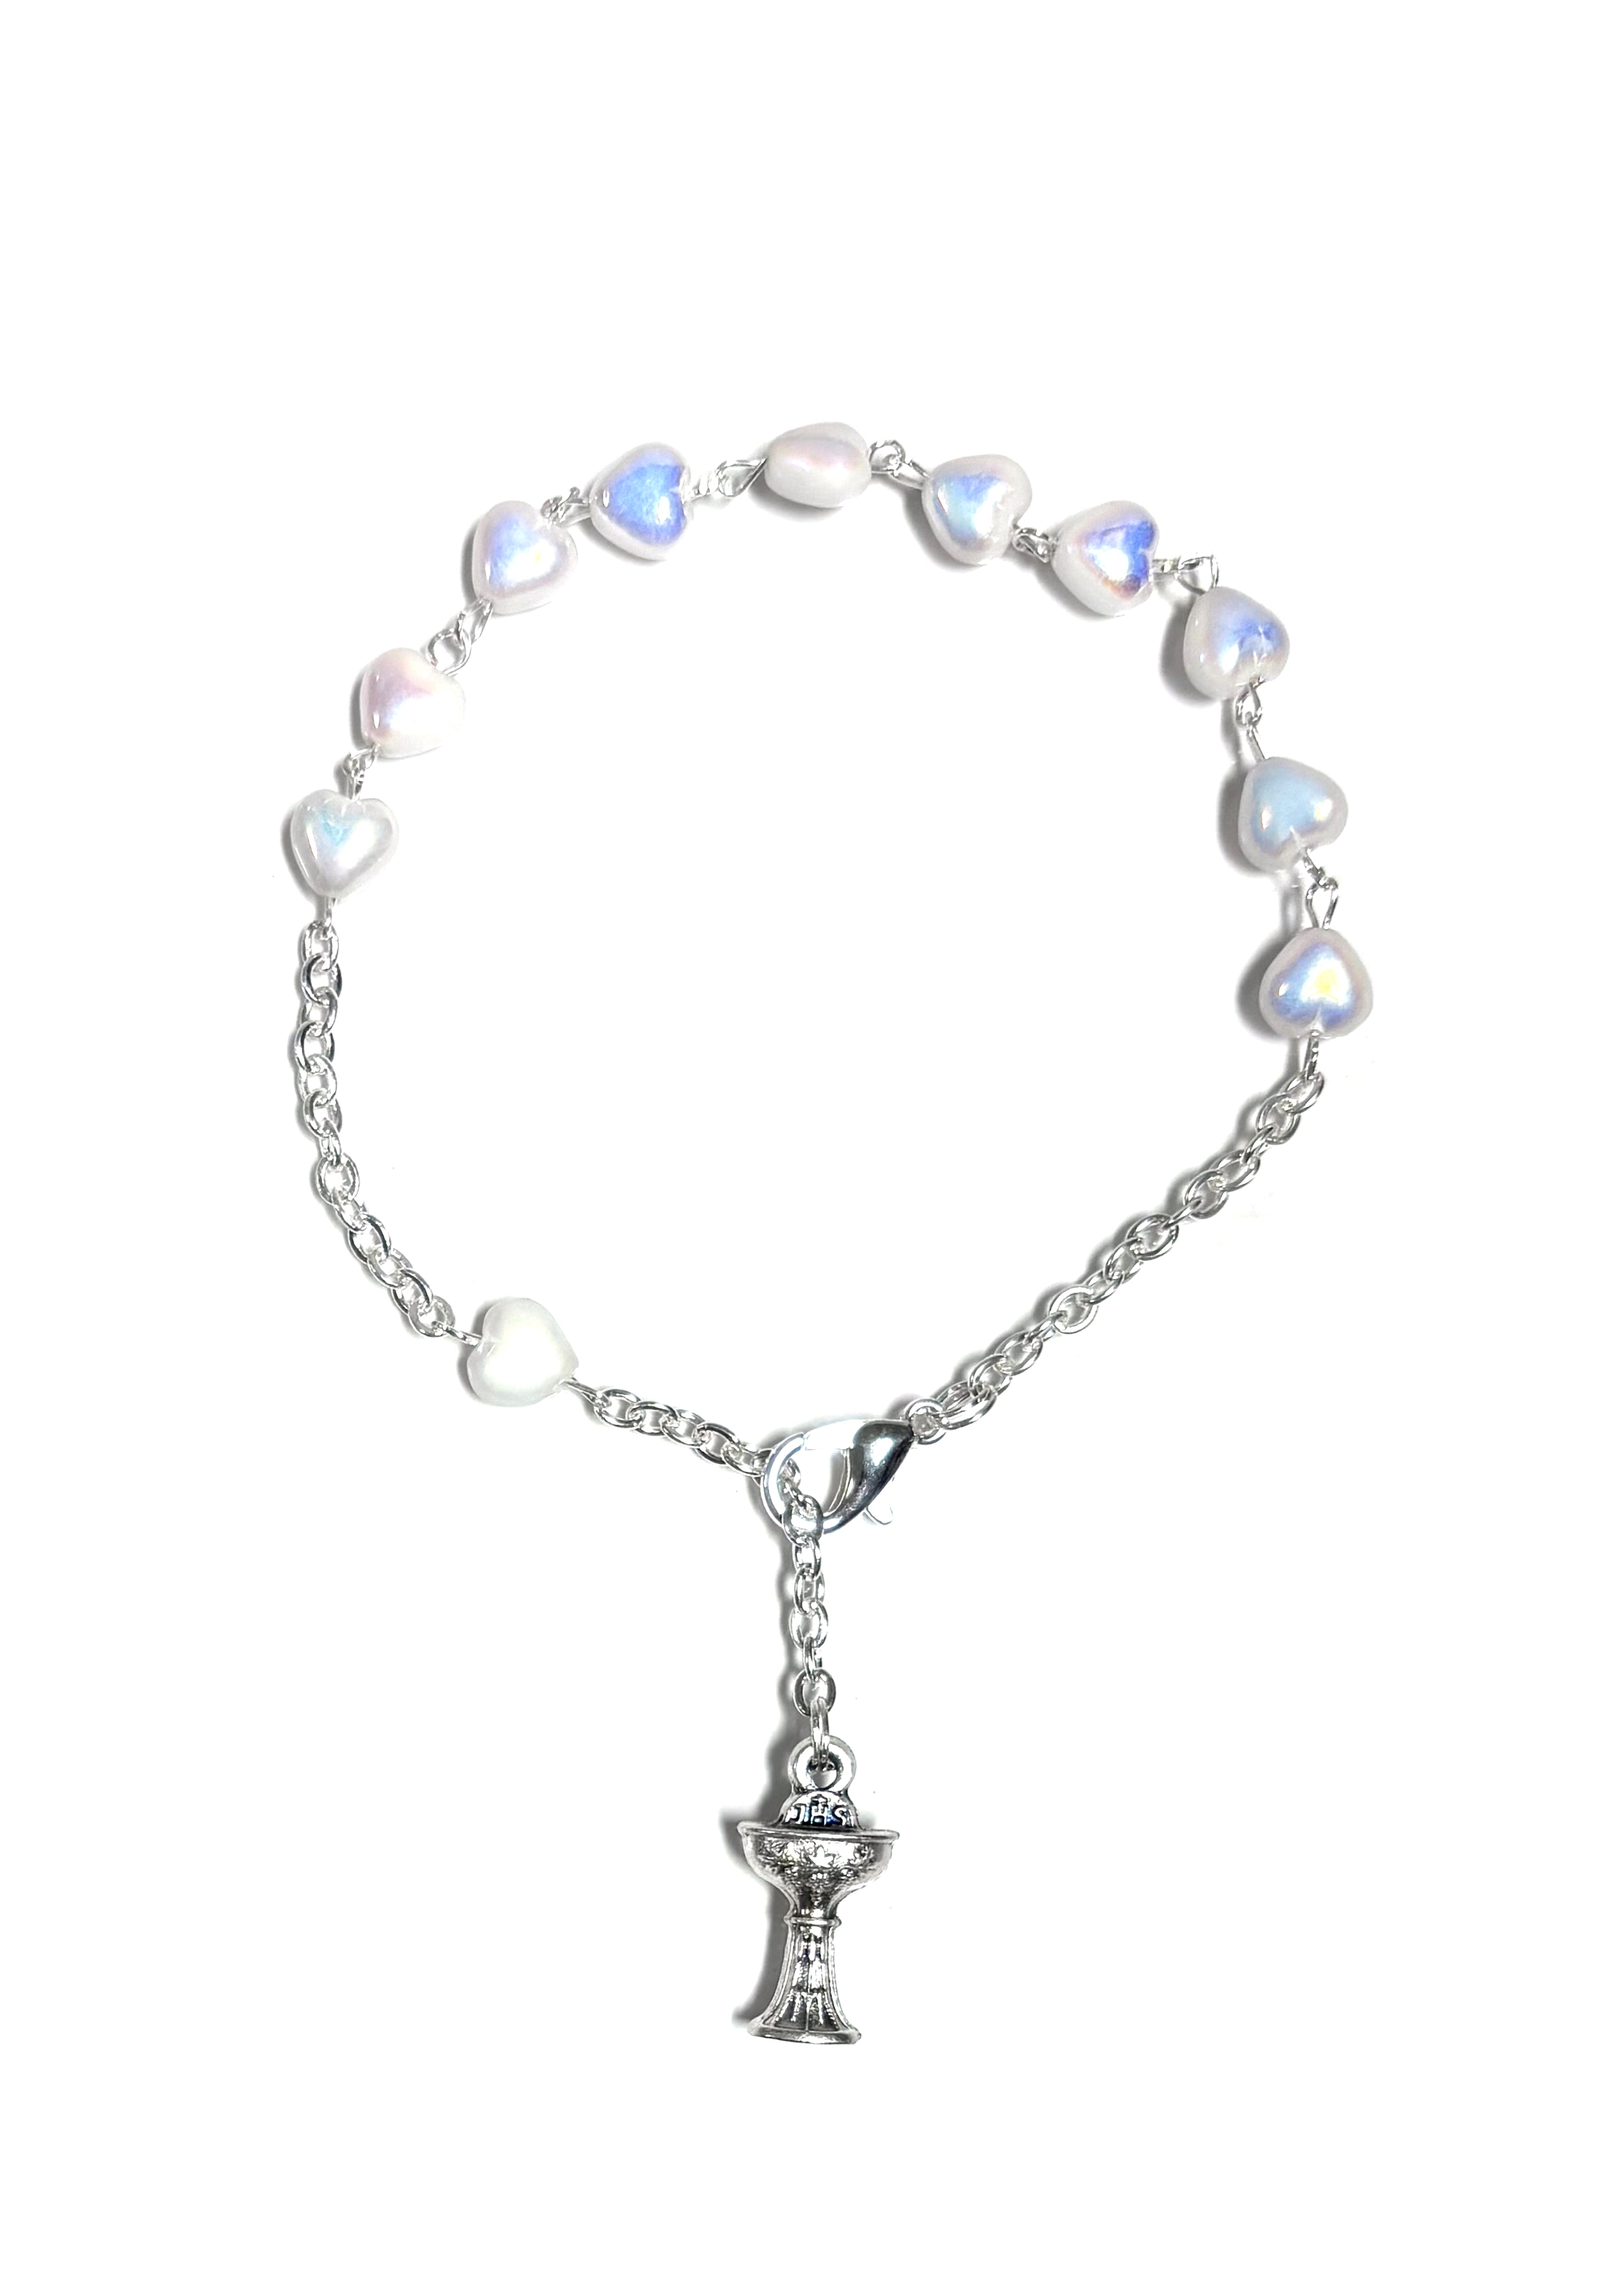 White enamel heart bead bracelet with chalis